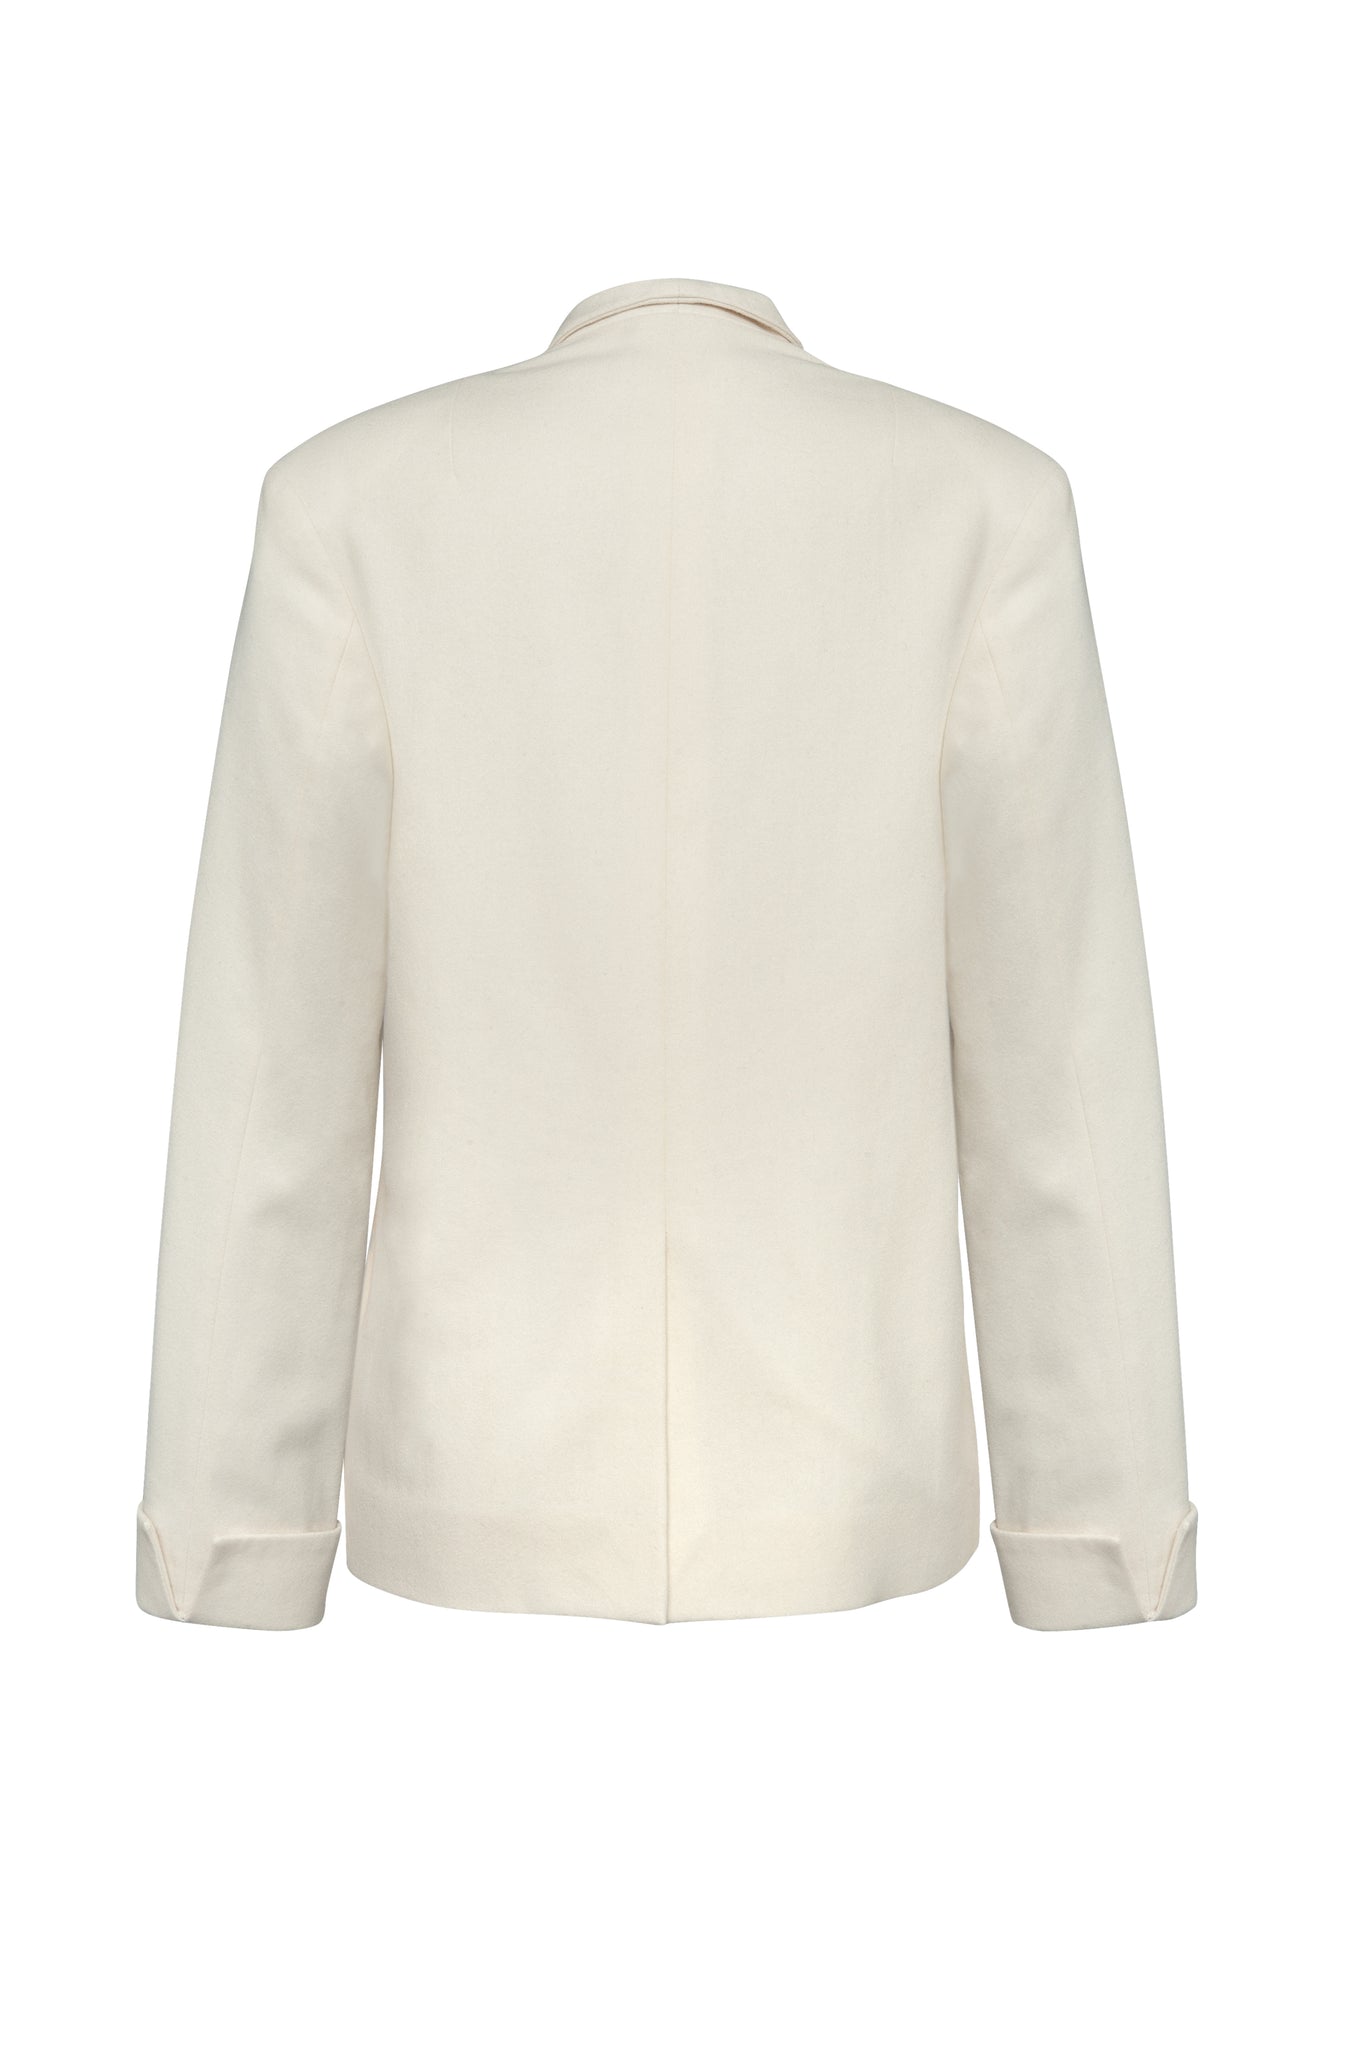 Organic Wool Jacket Ivory backside - hello'ben store